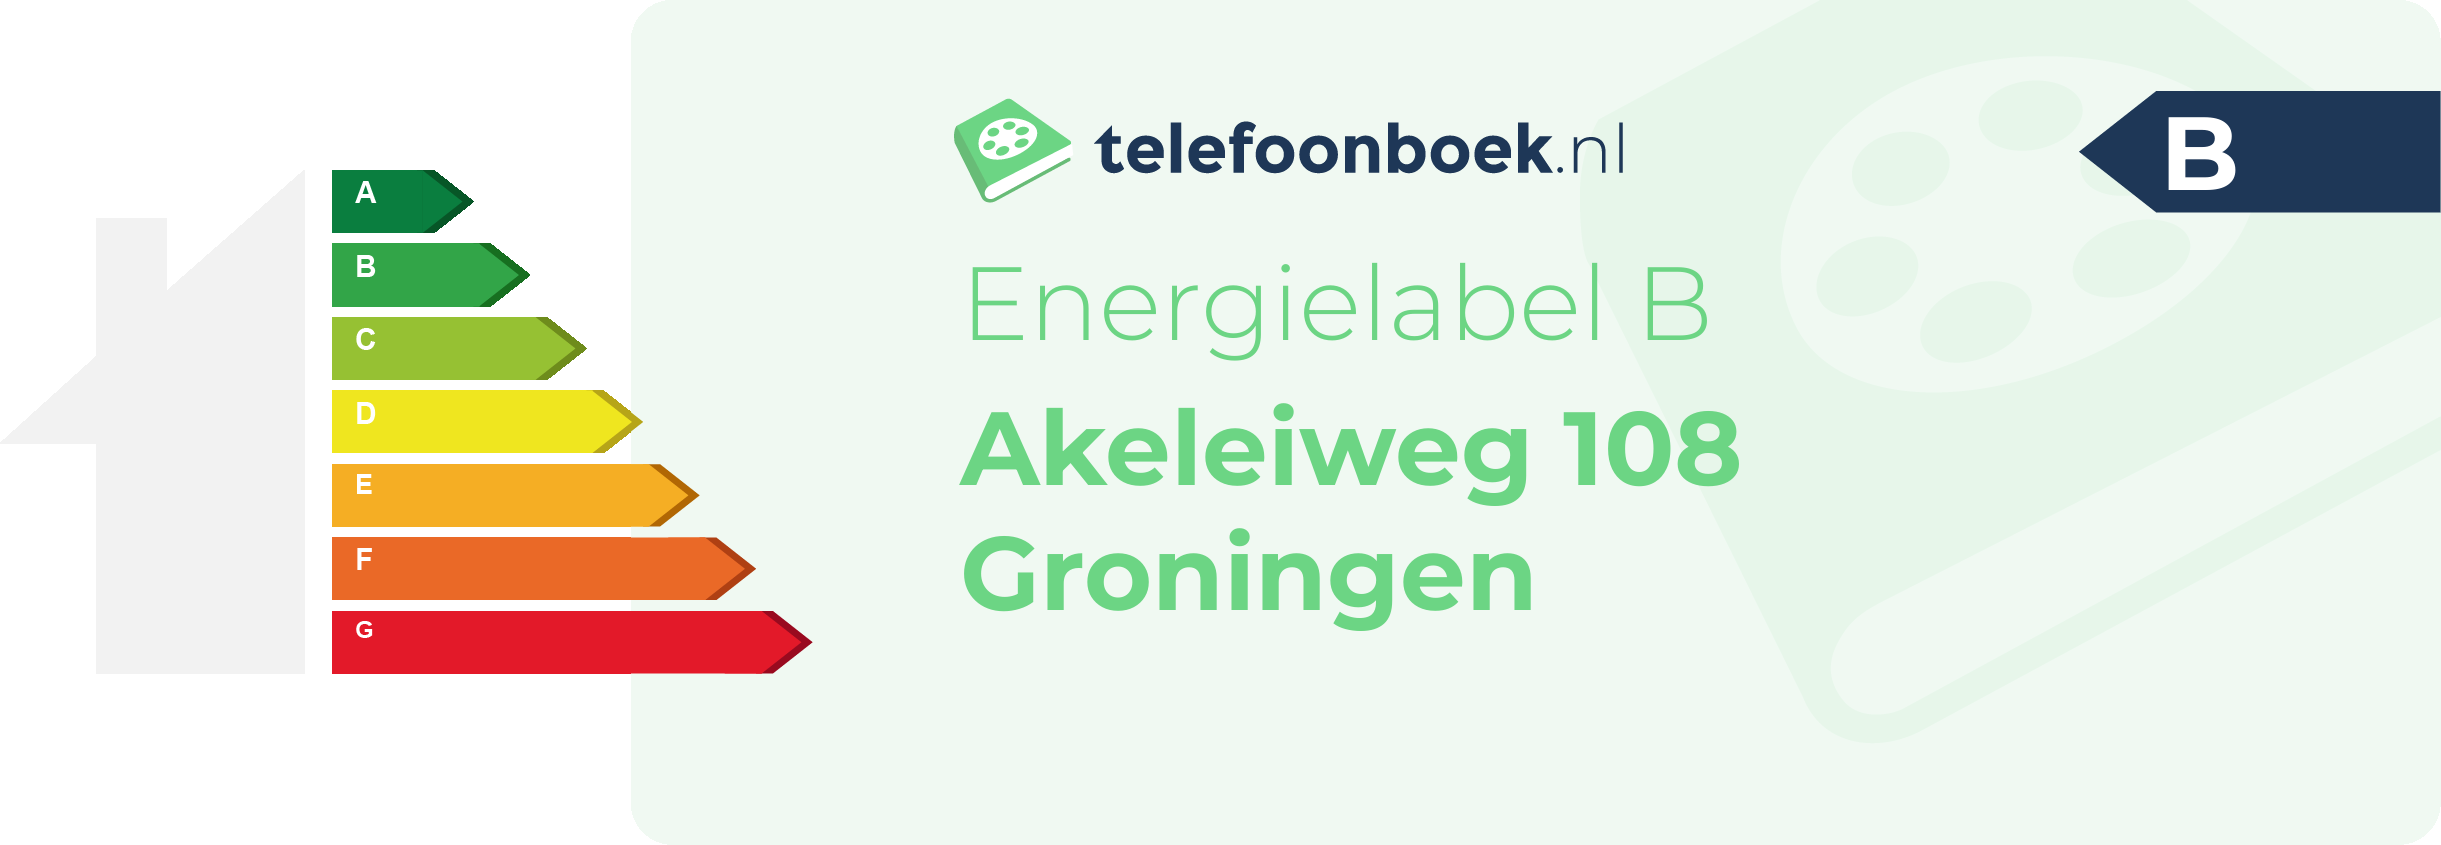 Energielabel Akeleiweg 108 Groningen